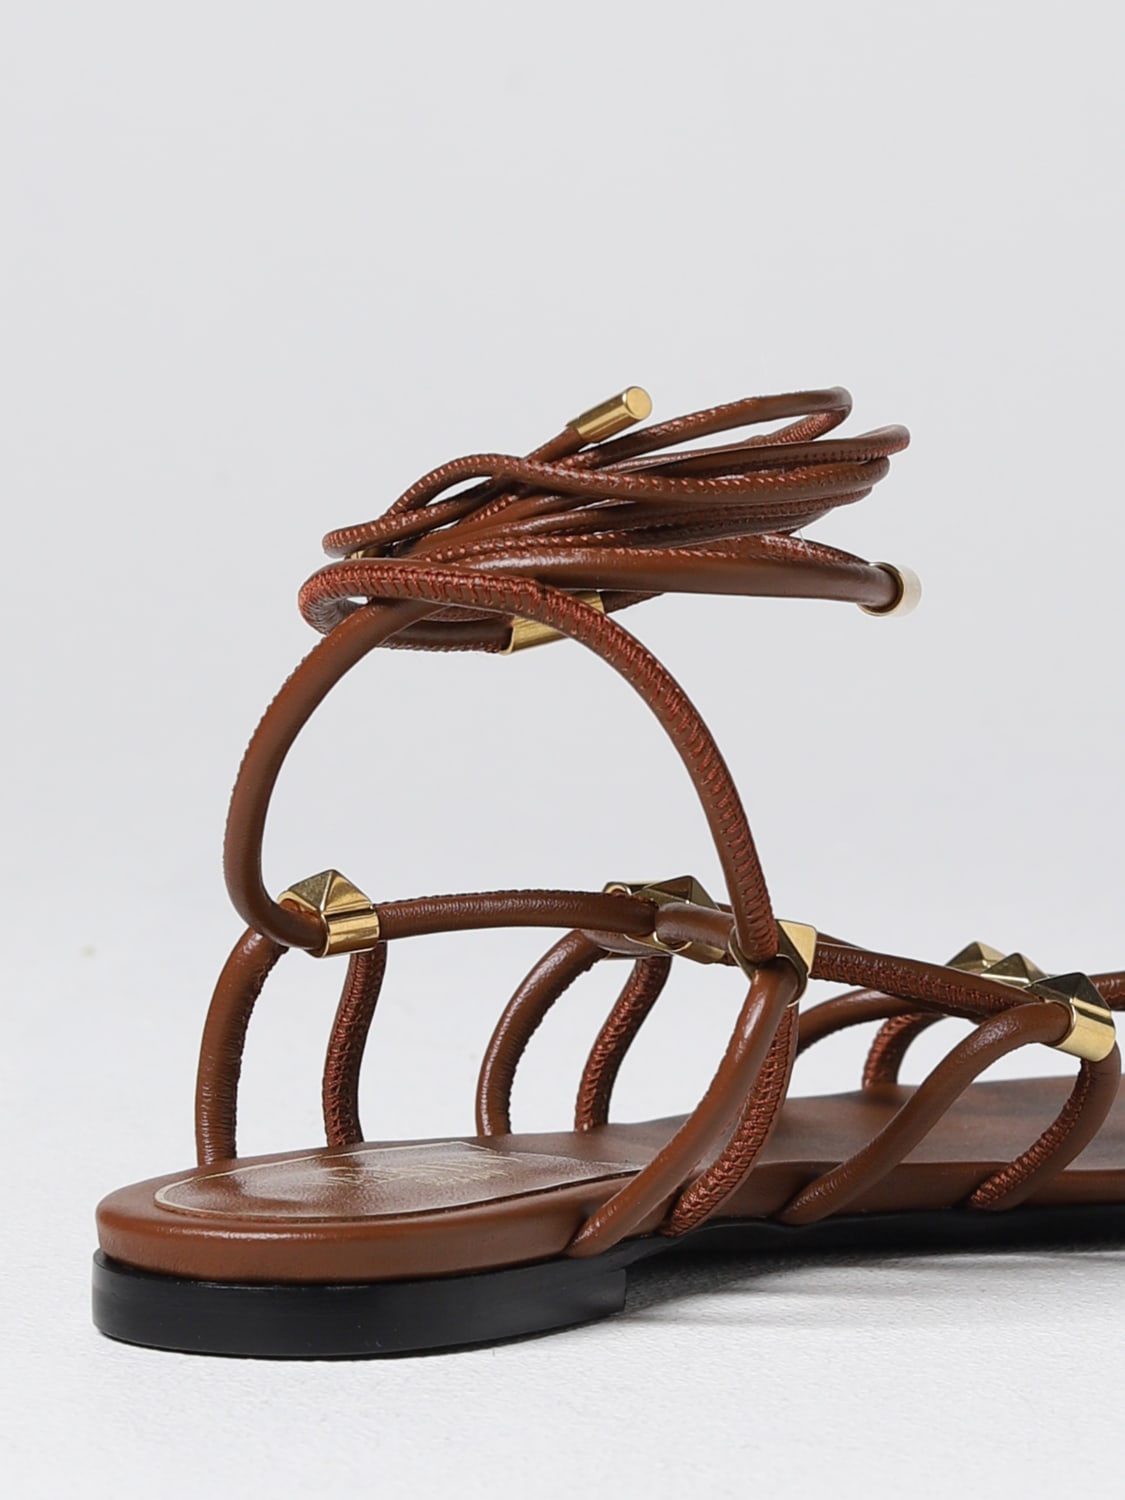 VALENTINO GARAVANI: Rockstud Net sandals in nappa leather - | Valentino Garavani 2W2S0GG6XLX online on GIGLIO.COM